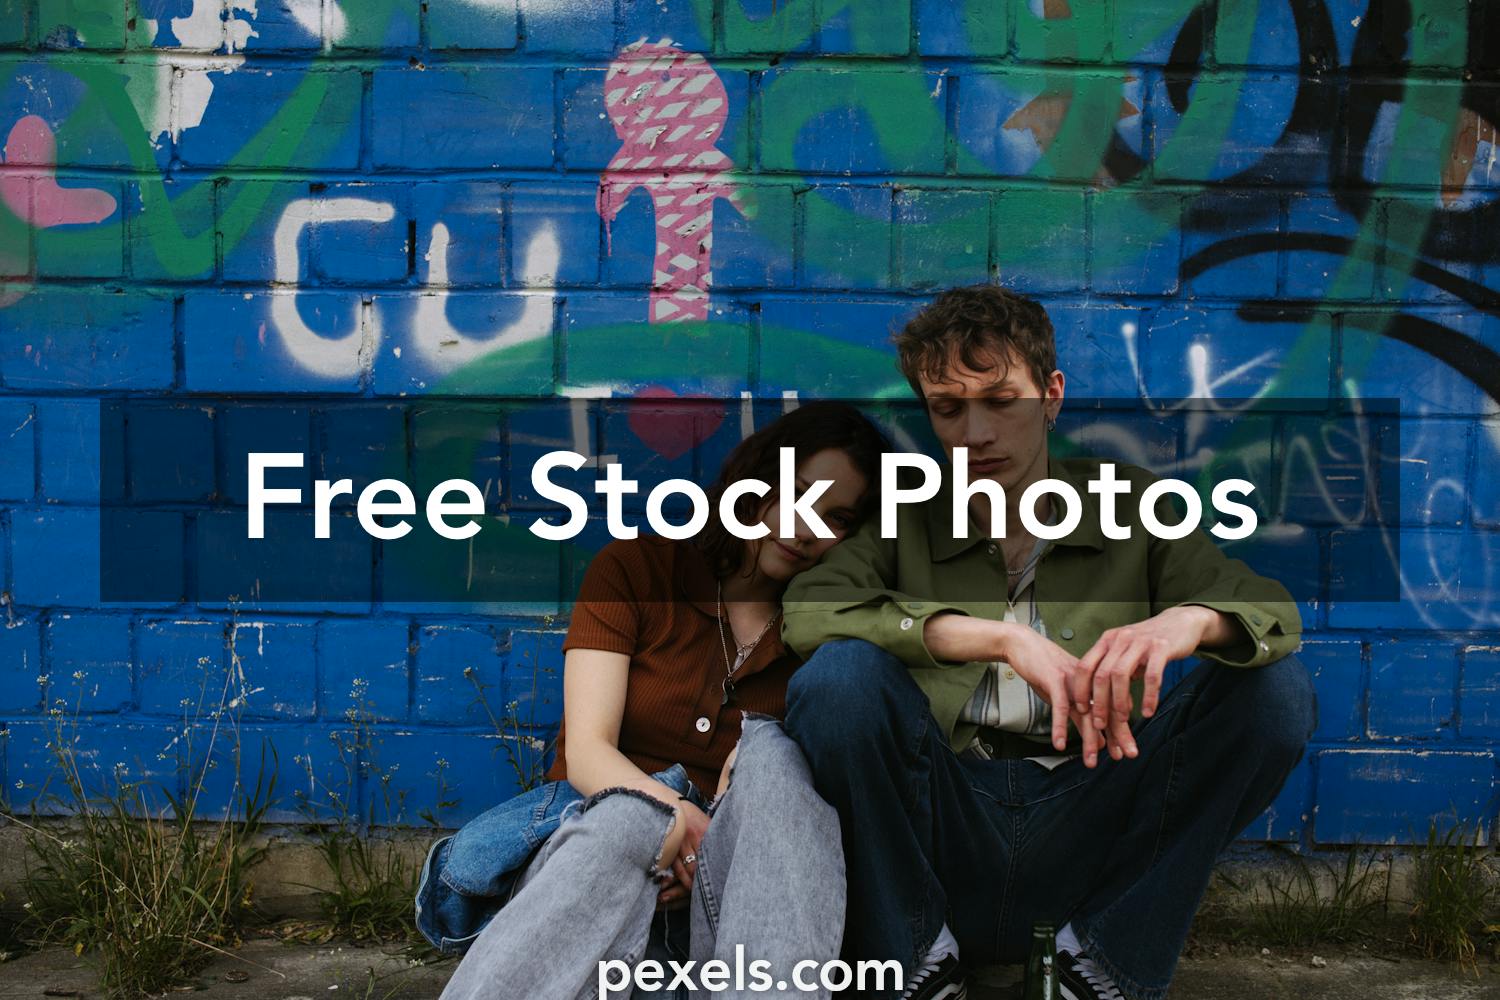 Free Stock Photos, high quality images, bonnie jones actress perry mason.